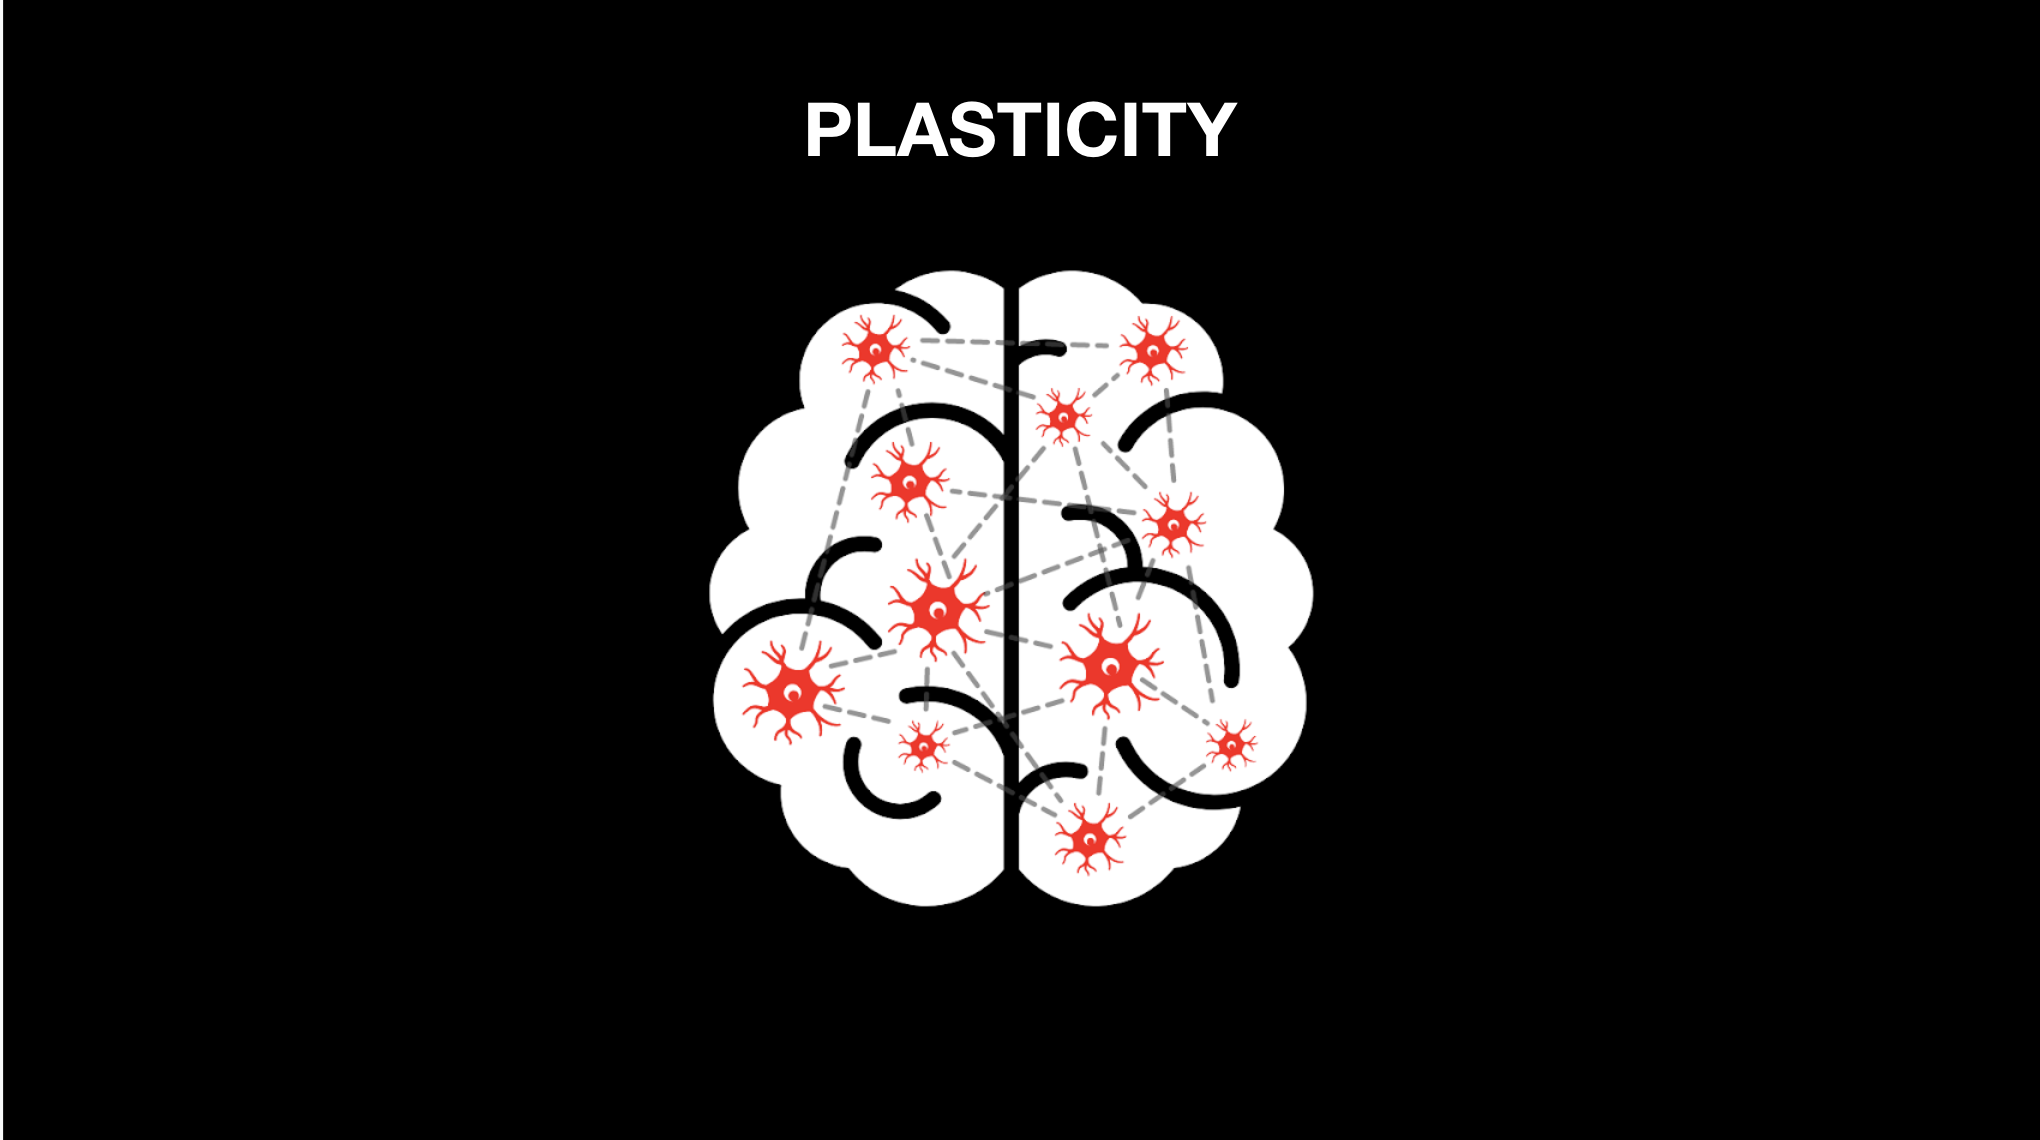 Brain diagram showing plasticity